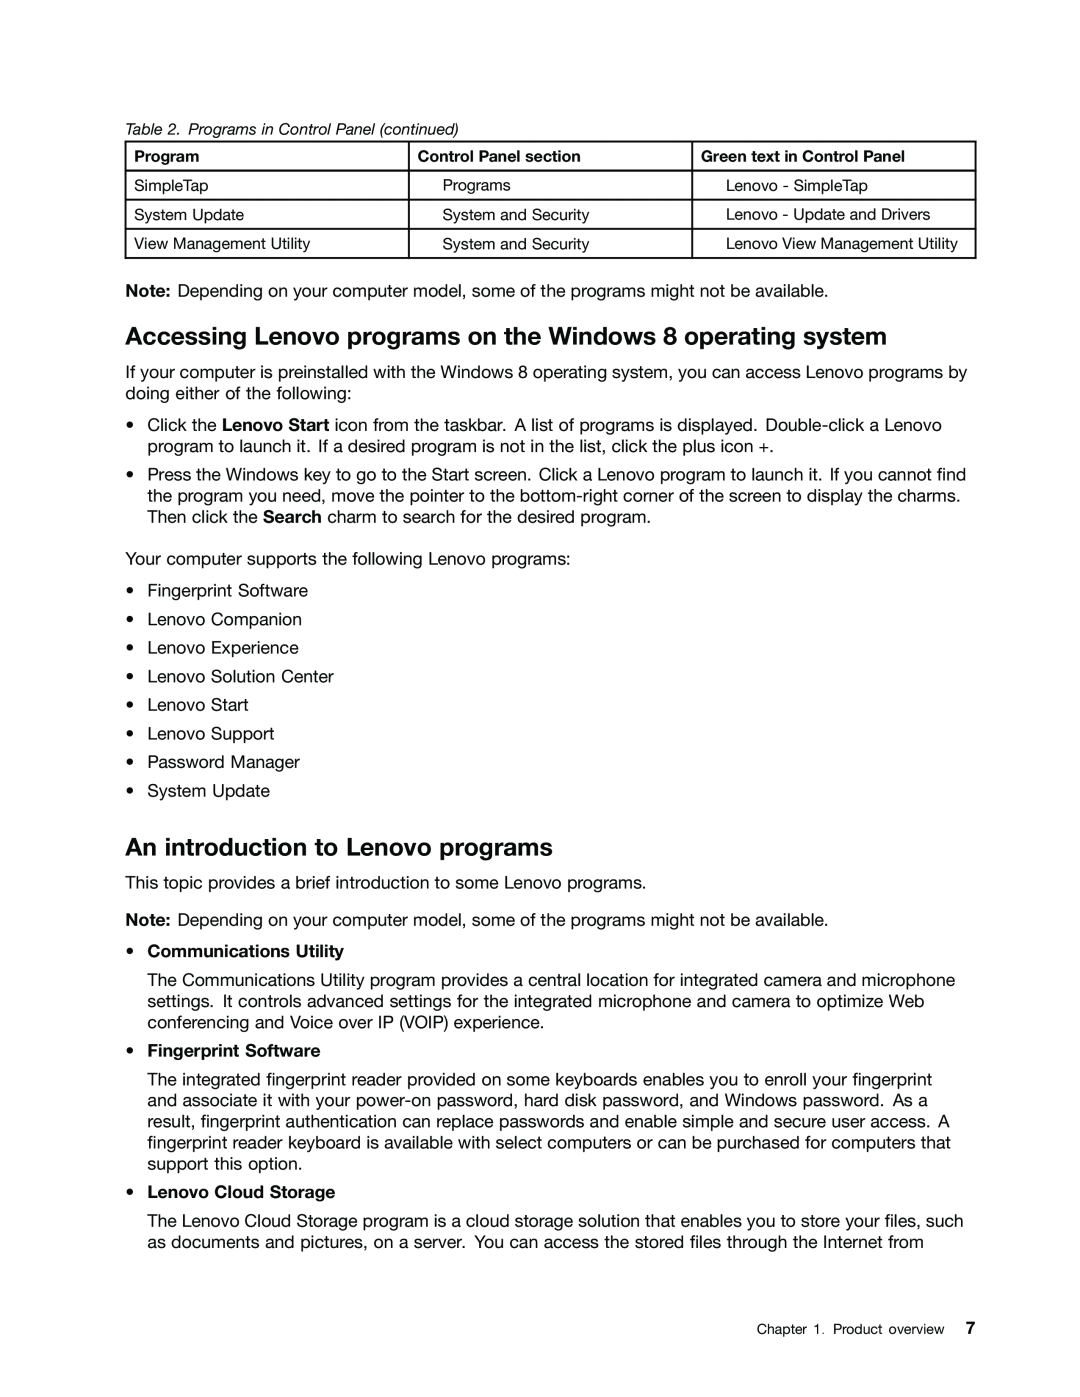 Lenovo 1765 An introduction to Lenovo programs, •Communications Utility, •Fingerprint Software, •Lenovo Cloud Storage 